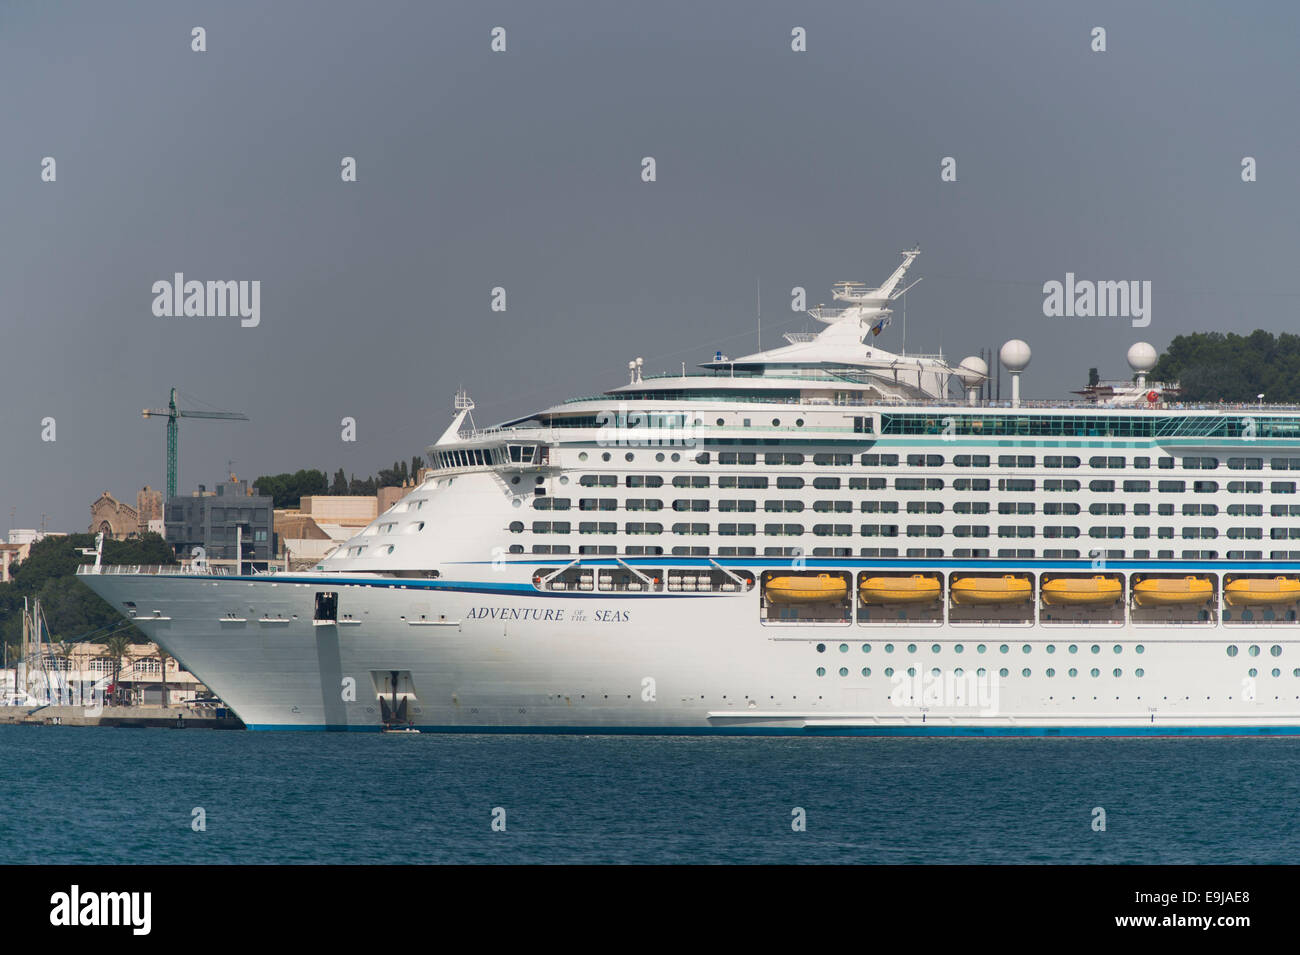 Royal Caribbean è avventuriero dei mari nave da crociera a Cartagena cruise port in Spagna. Foto Stock